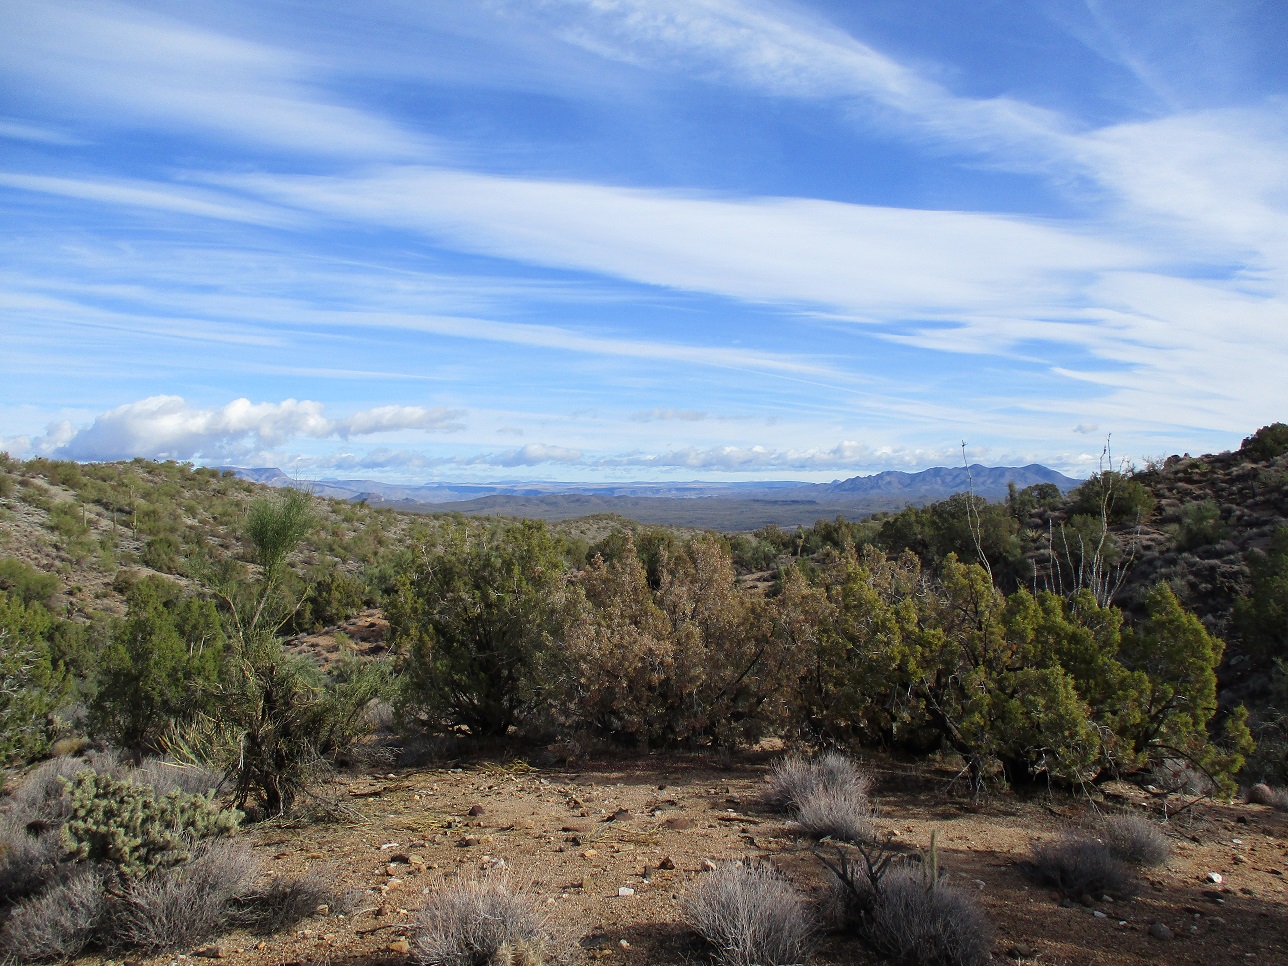 Poachie Range, Arizona